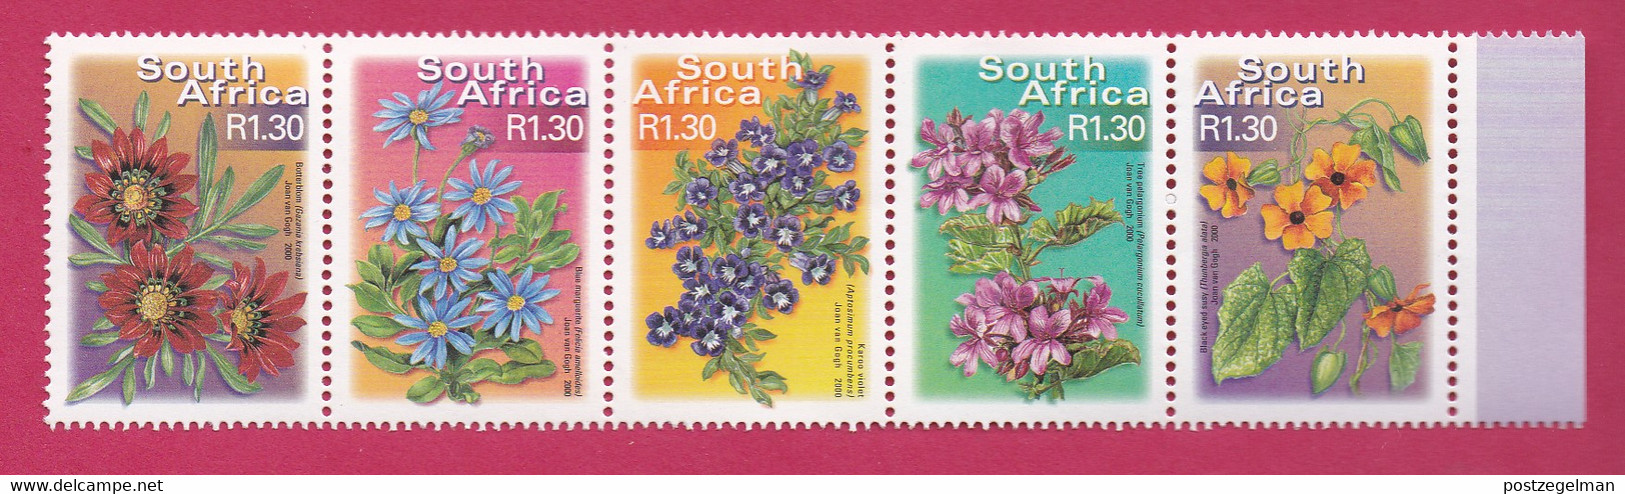 RSA, 2000, MNH Stamp(s)  , Strip Of 5 Flowers, SACC Nr(s).  1304-1308, Scannr. M9081 - Ongebruikt